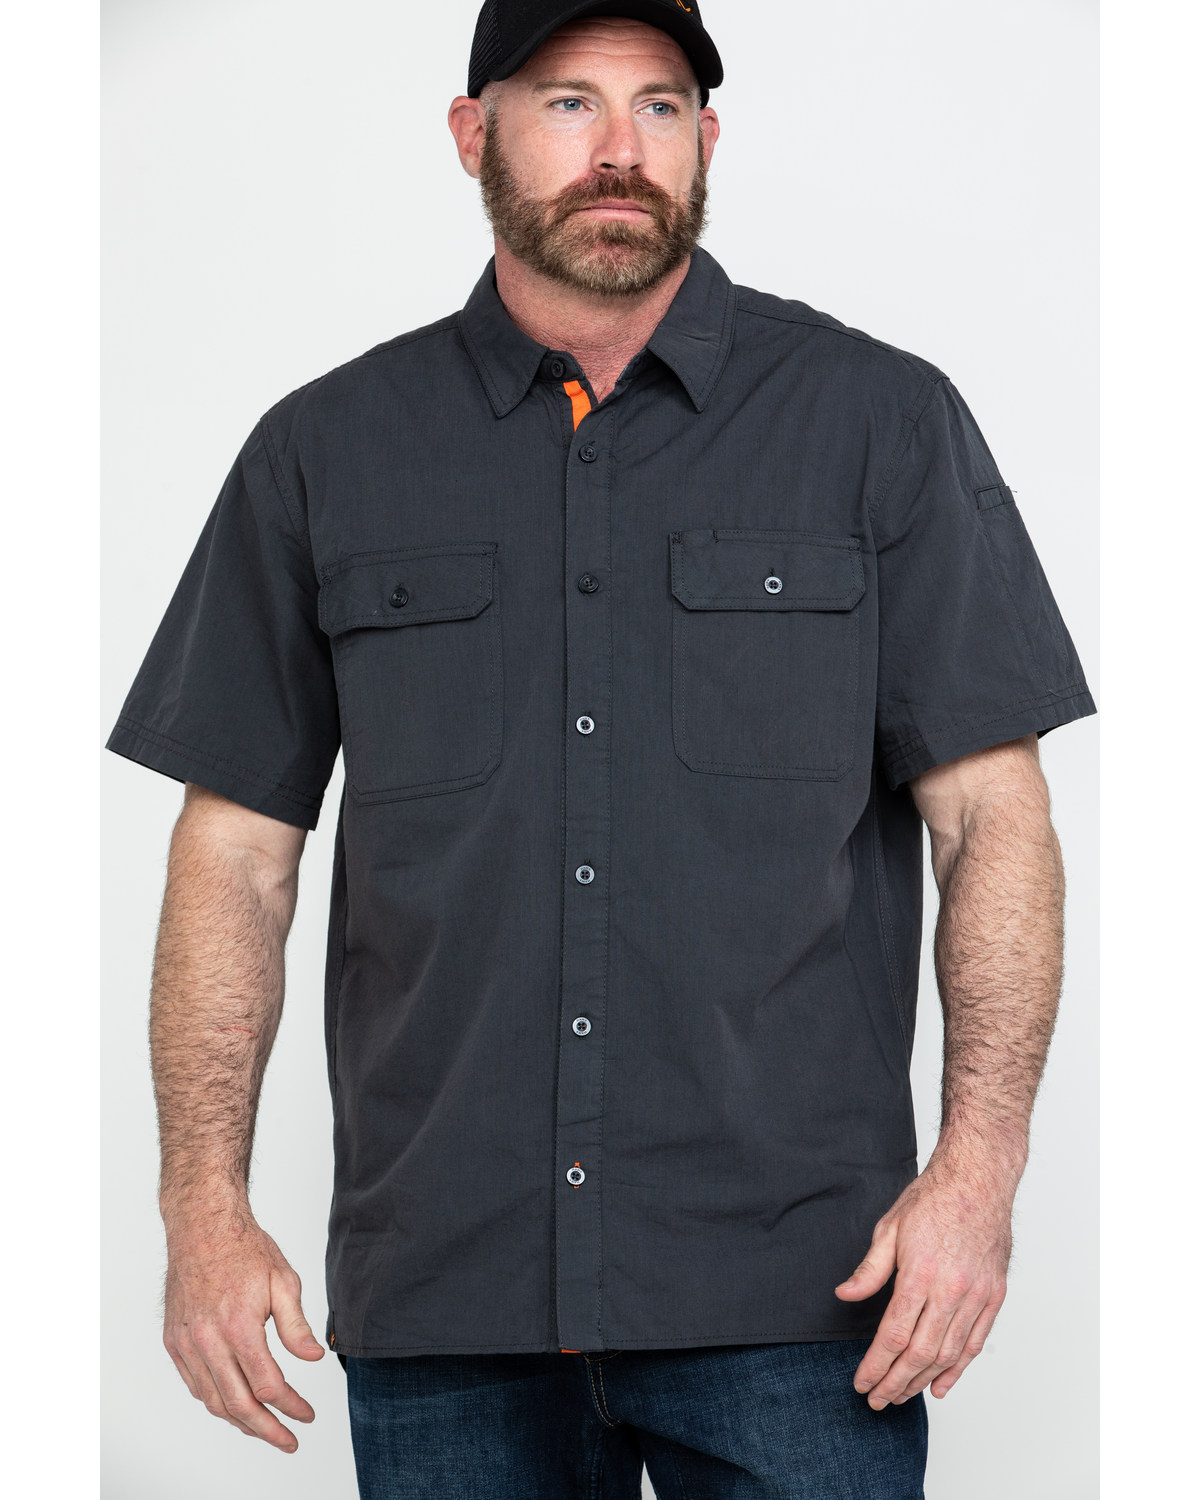 Hawx Men's Charcoal Solid Yarn Dye Two Pocket Short Sleeve Work Shirt - Big